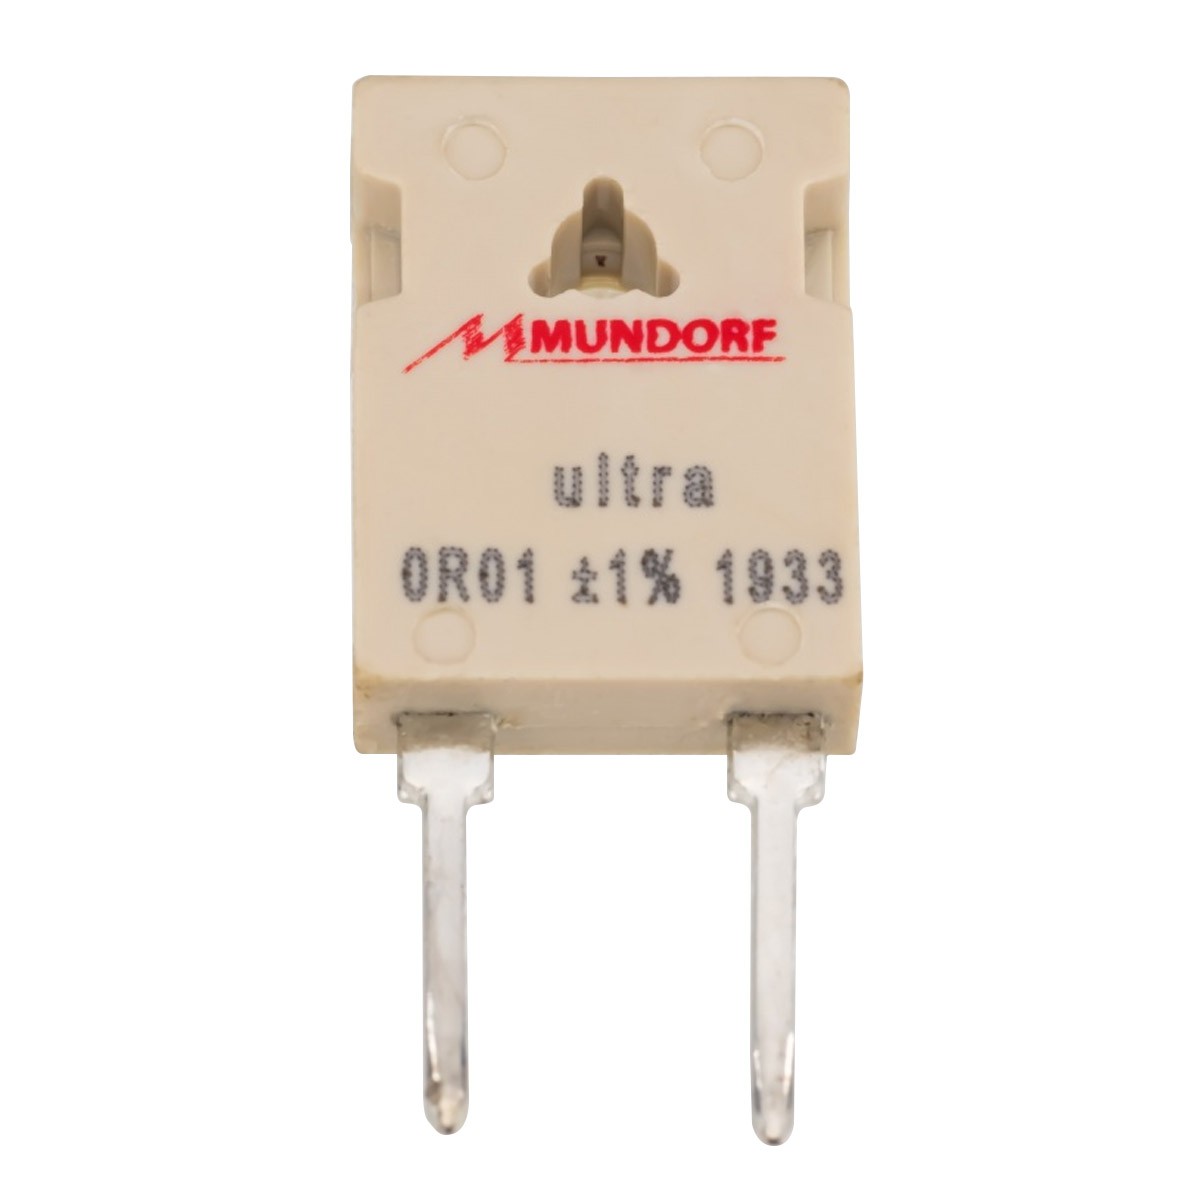 MUNDORF MRESIST ULTRA Resistor 30W 5.6 Ohm